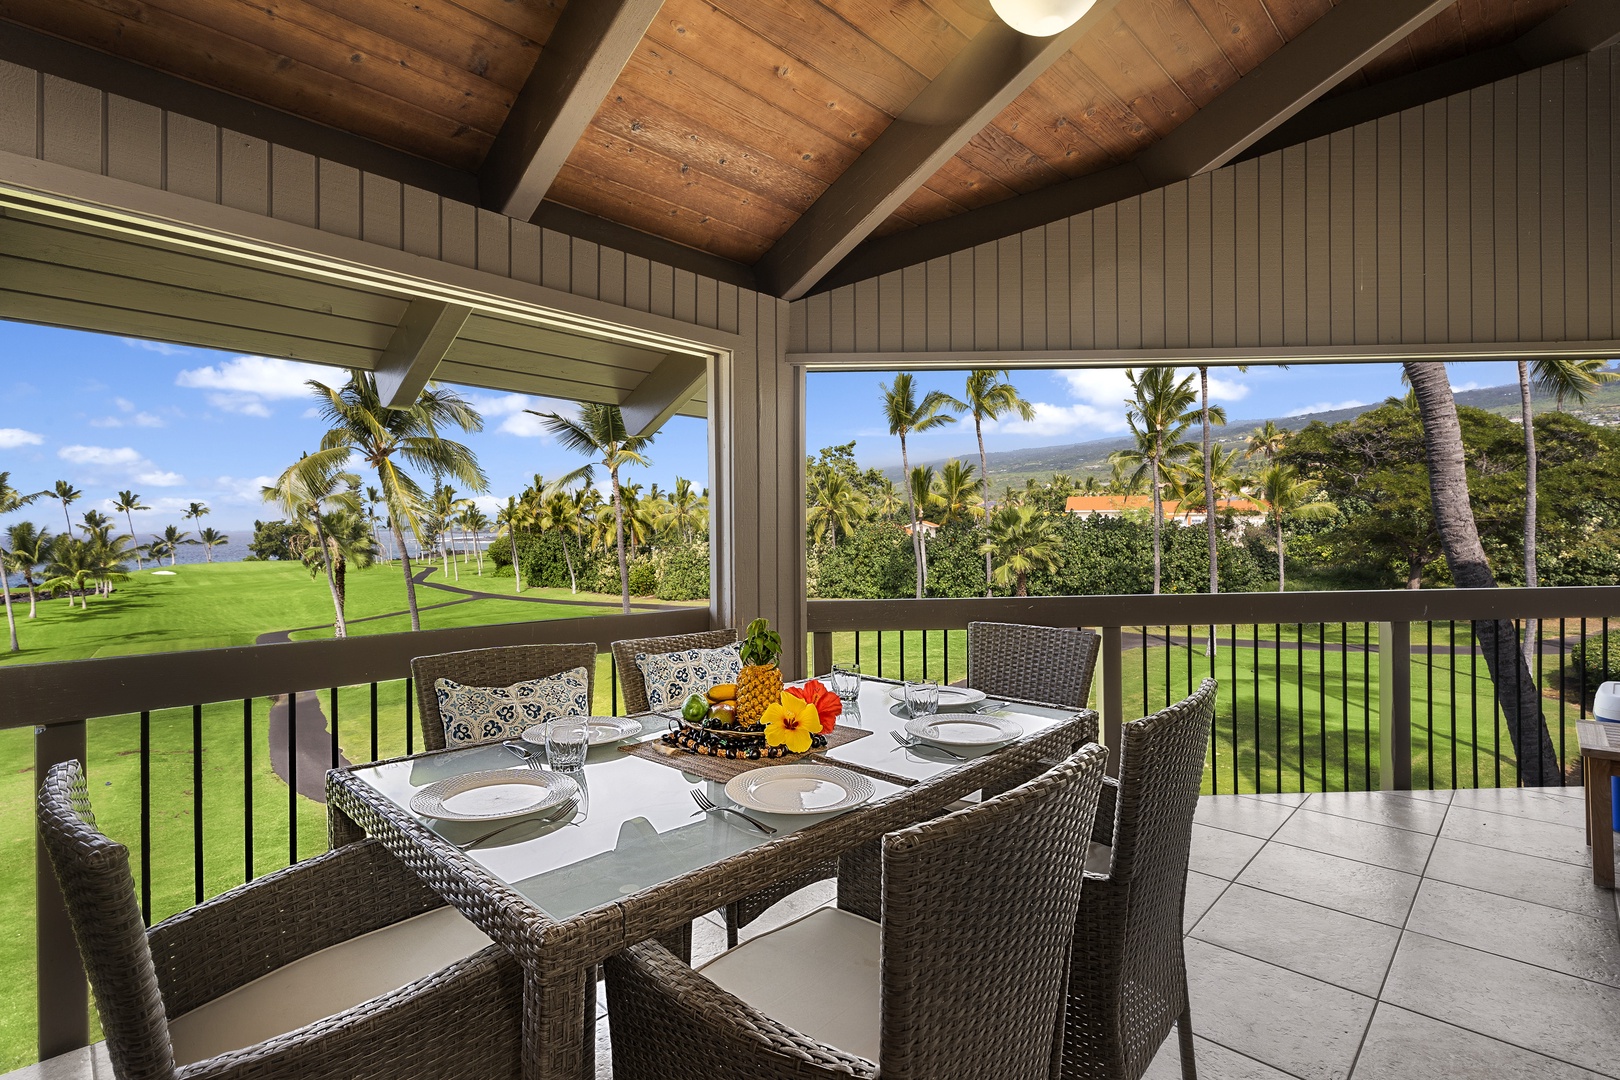 Kailua Kona Vacation Rentals, Kanaloa at Kona 1606 - Dining for 6 guests on the spacious Lanai!